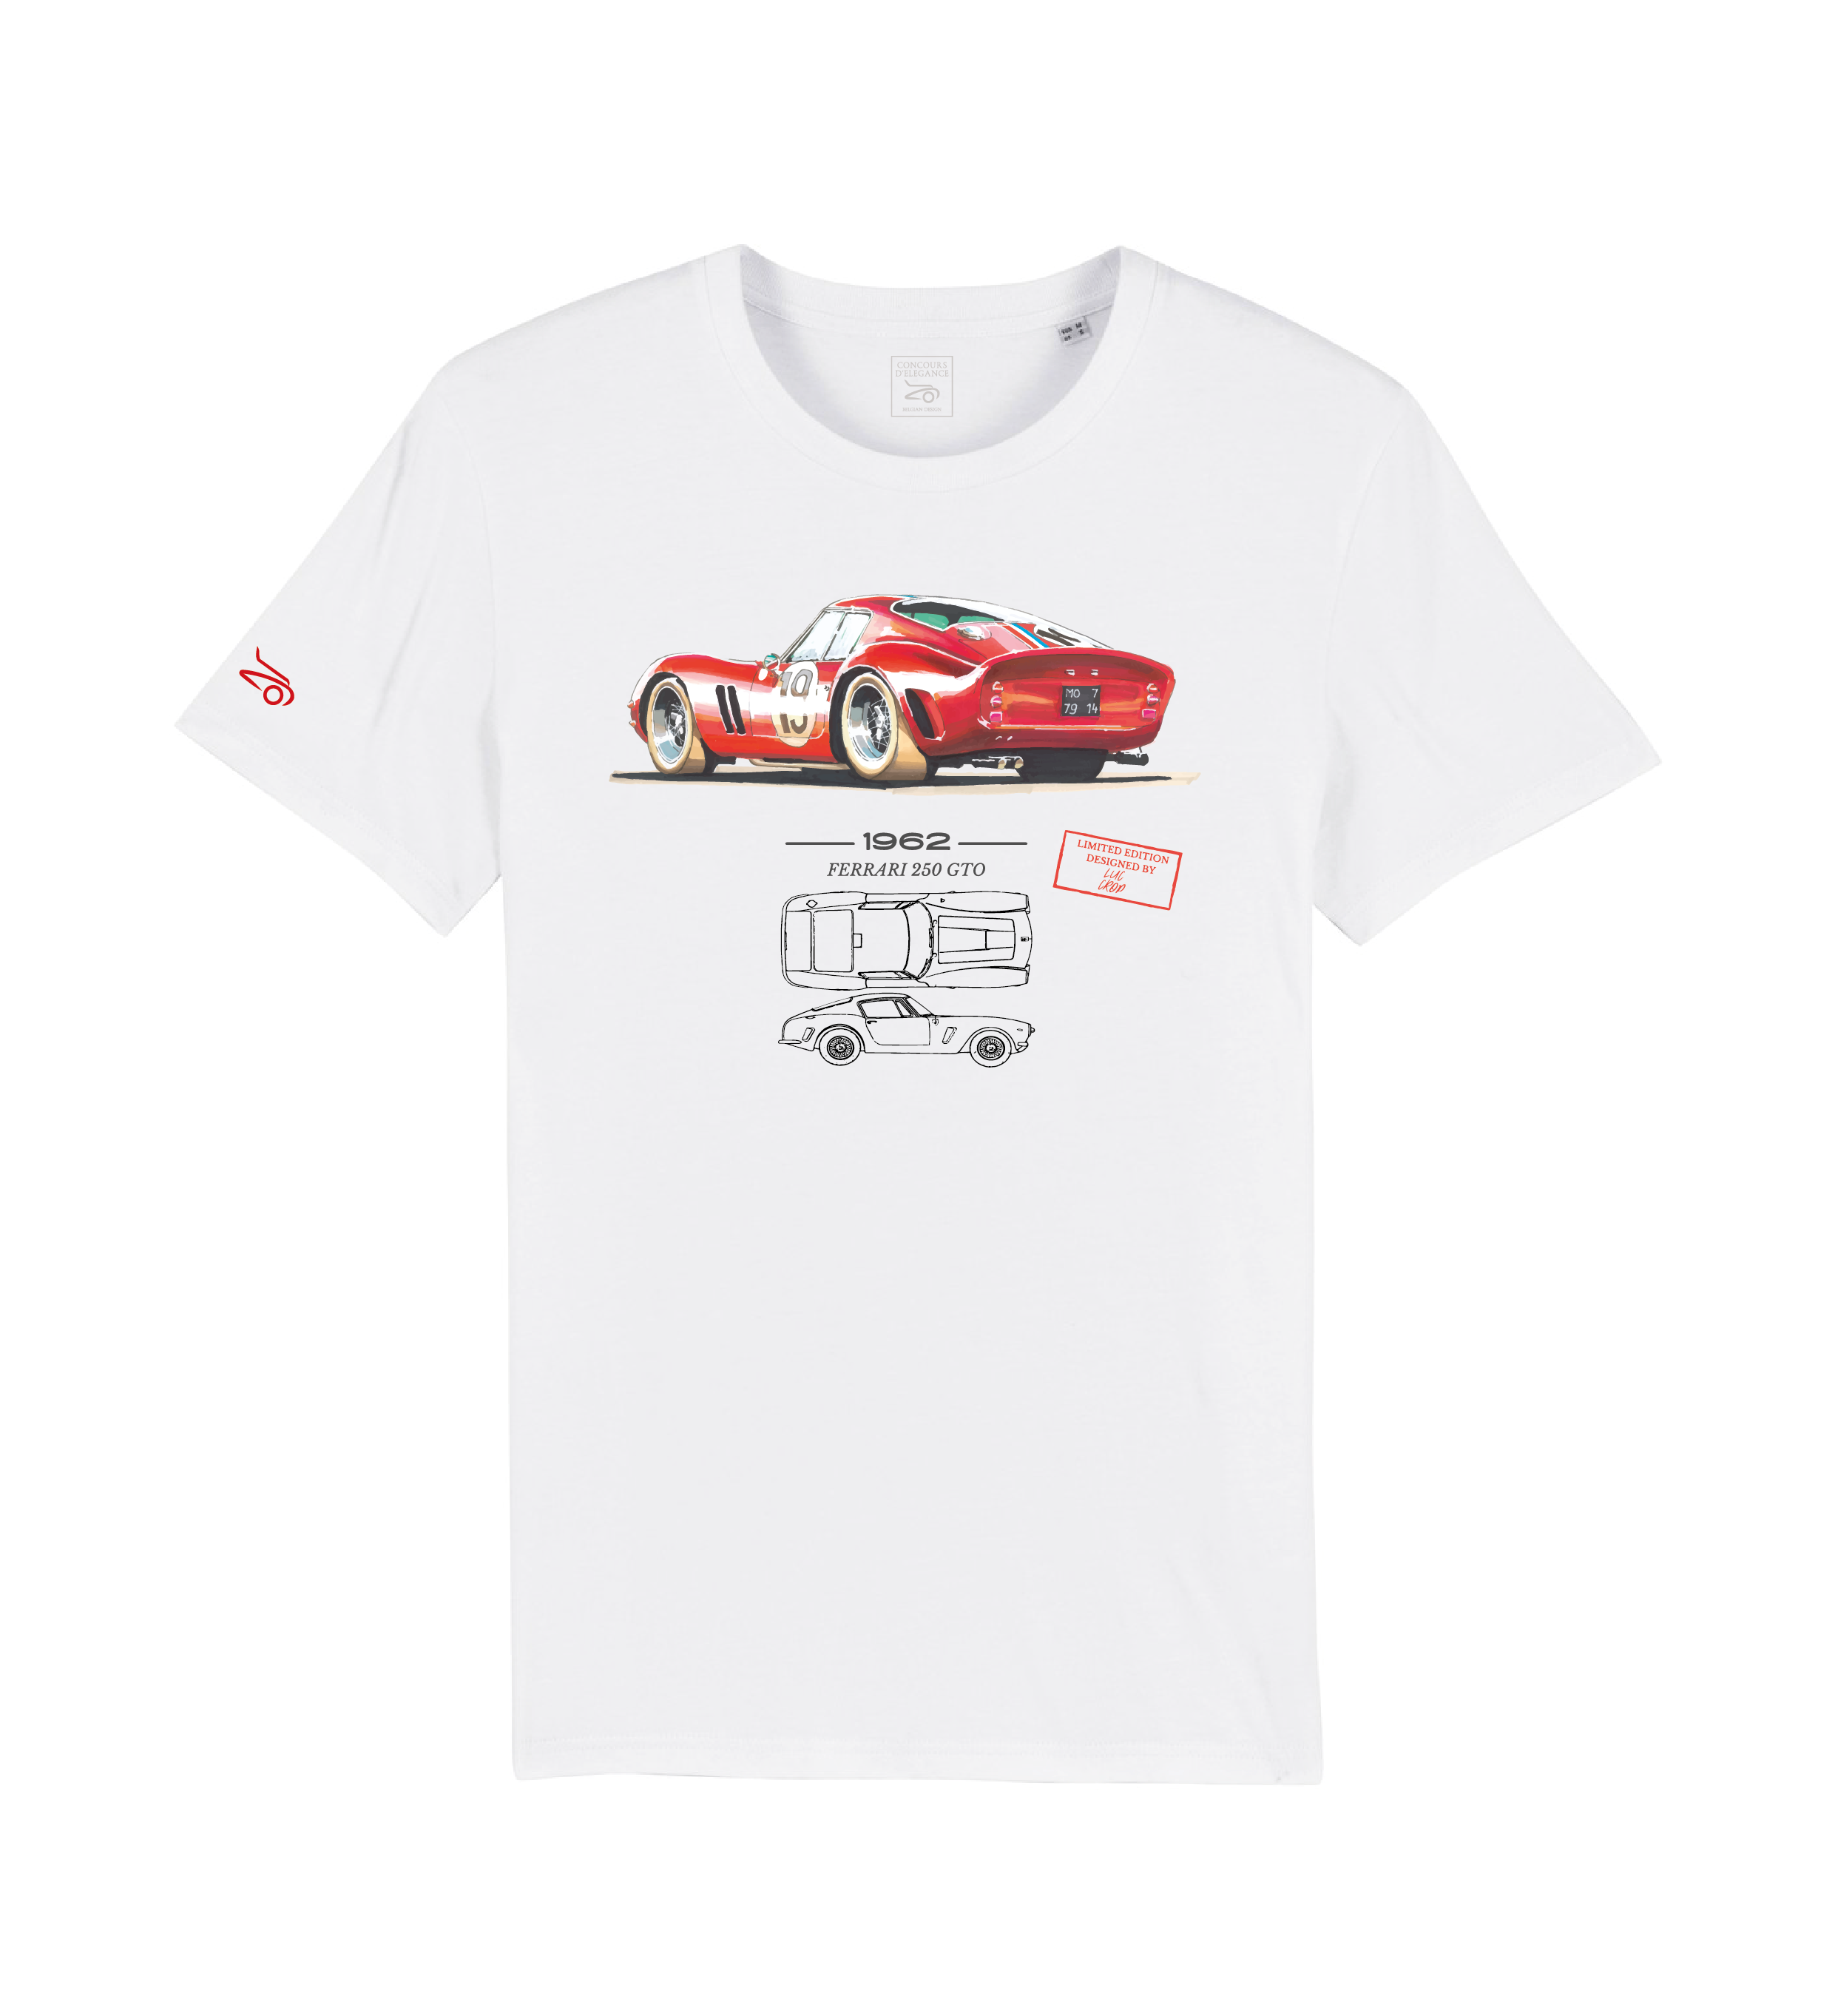 Limited Edition by Luc Crop: Ferrari 19 T-Shirt